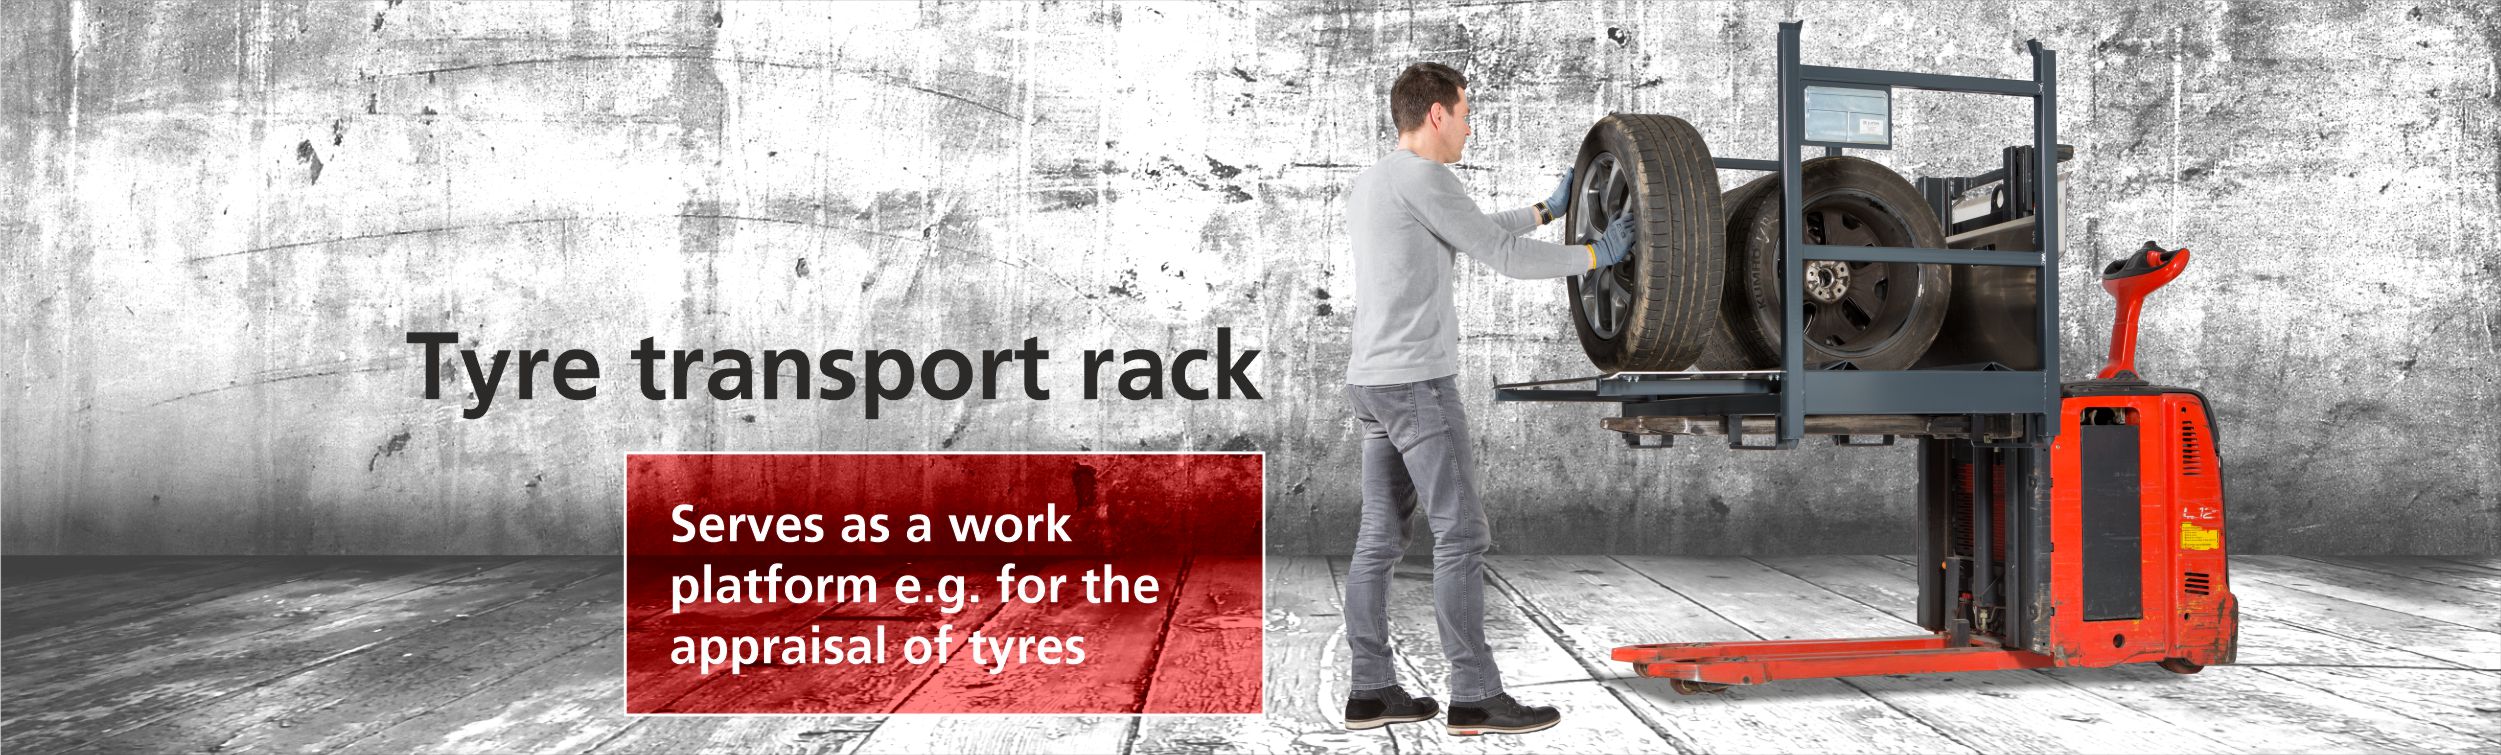 tyre_transport_rack